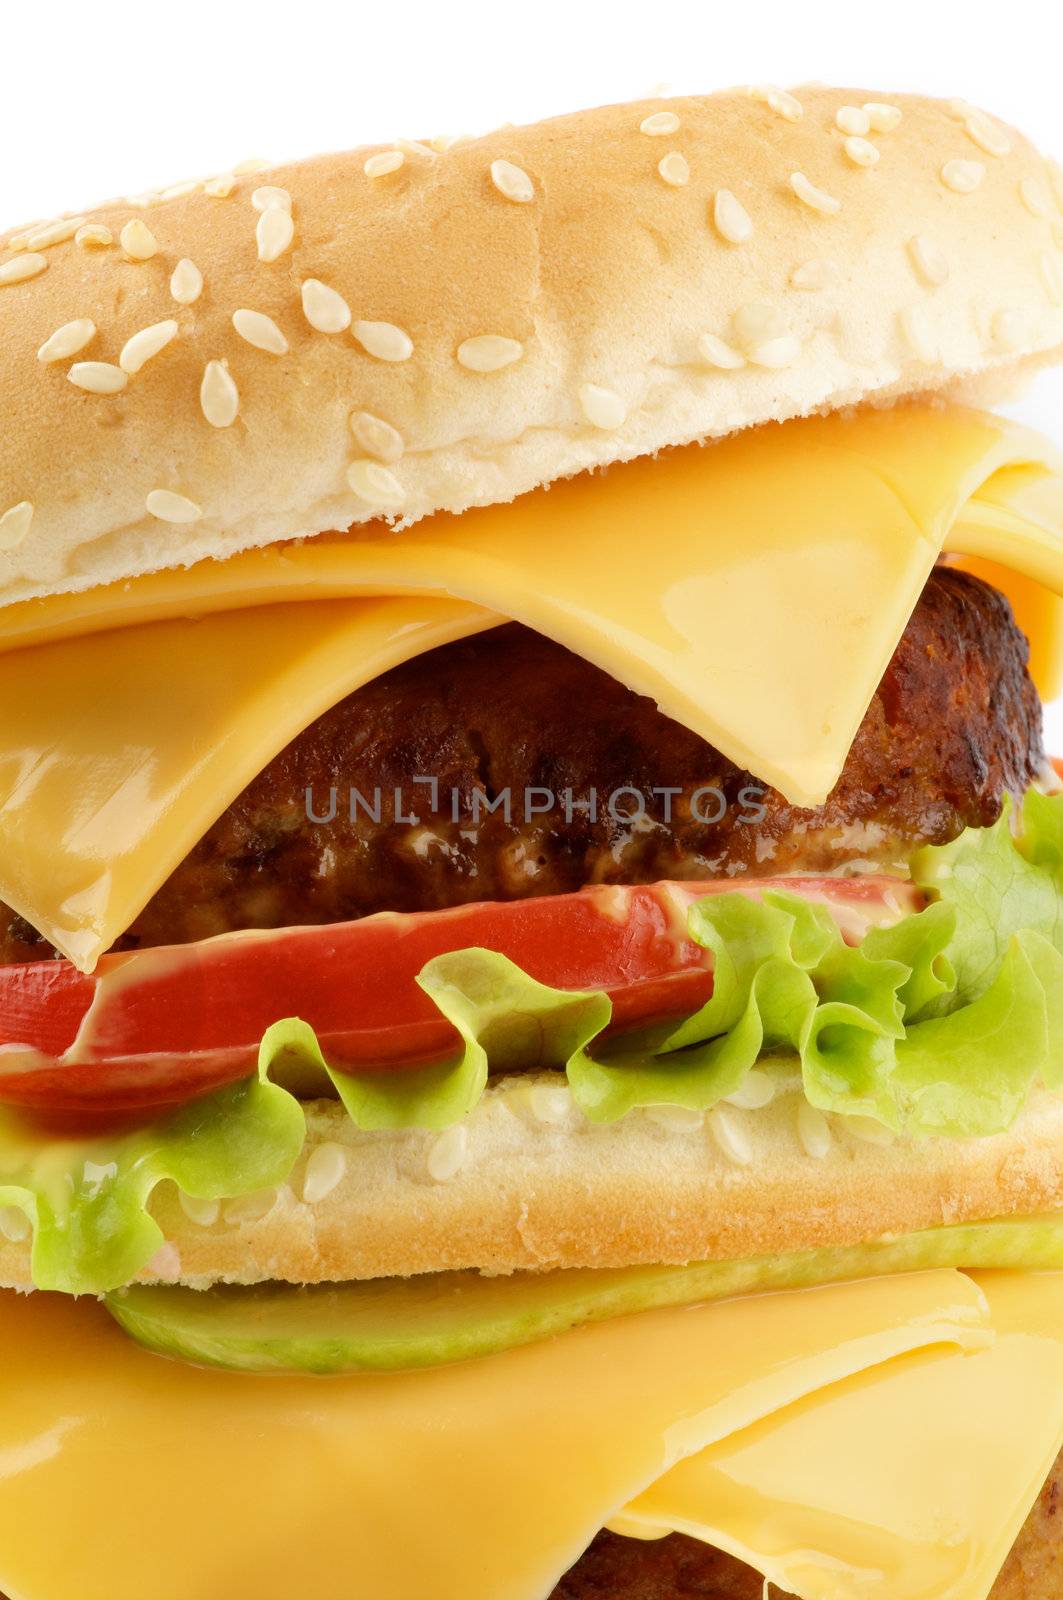 Tasty Cheeseburger closeup by zhekos